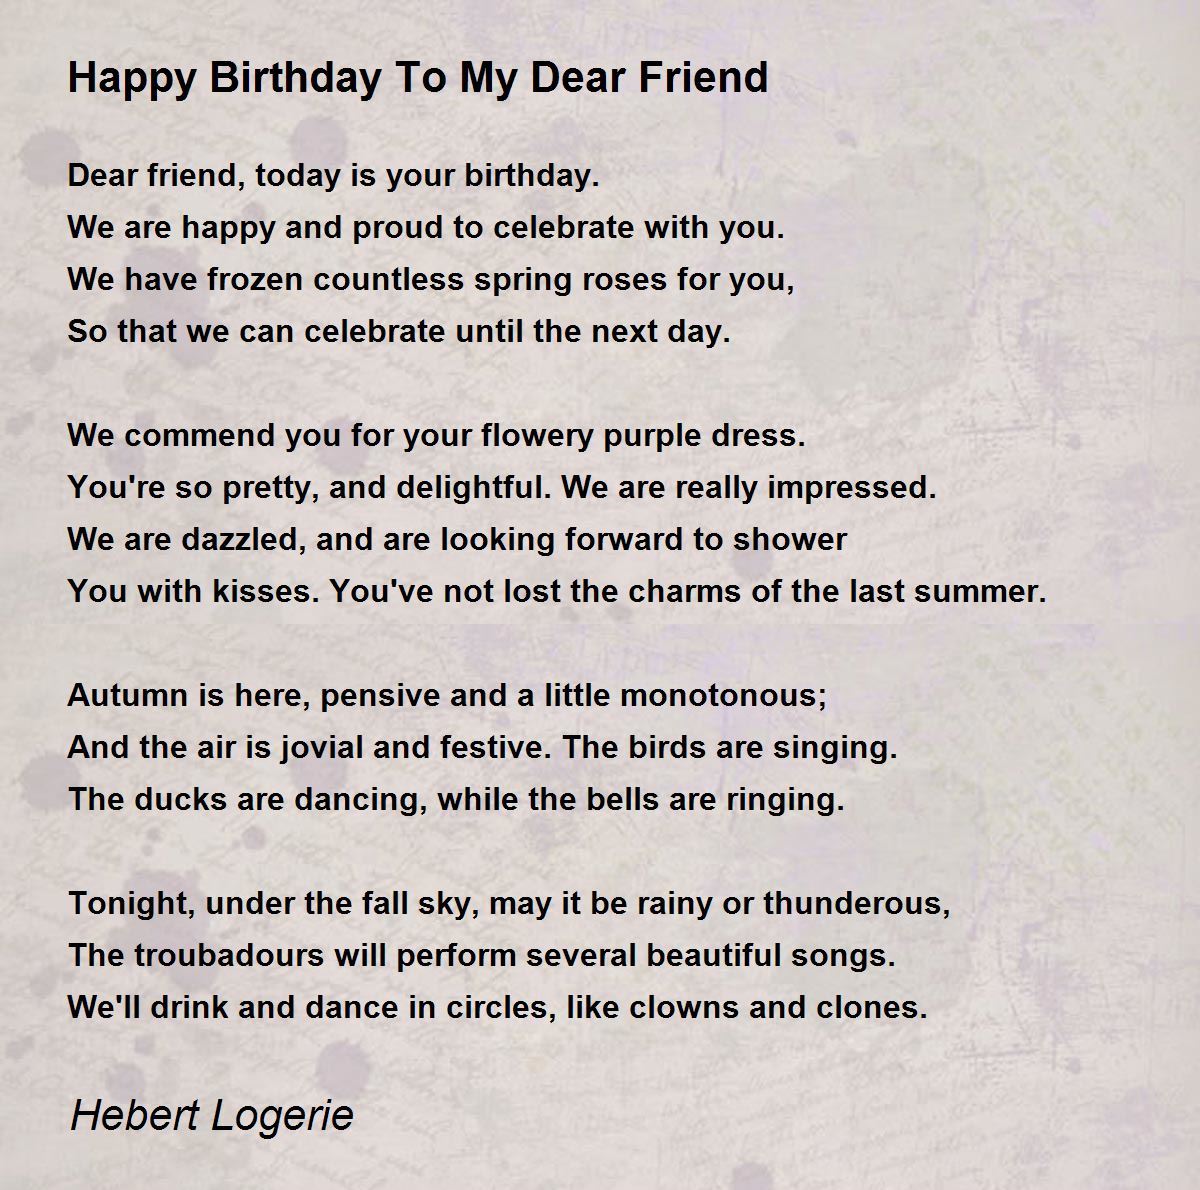 Happy Birthday To My Dear Friend - Happy Birthday To My Dear ...